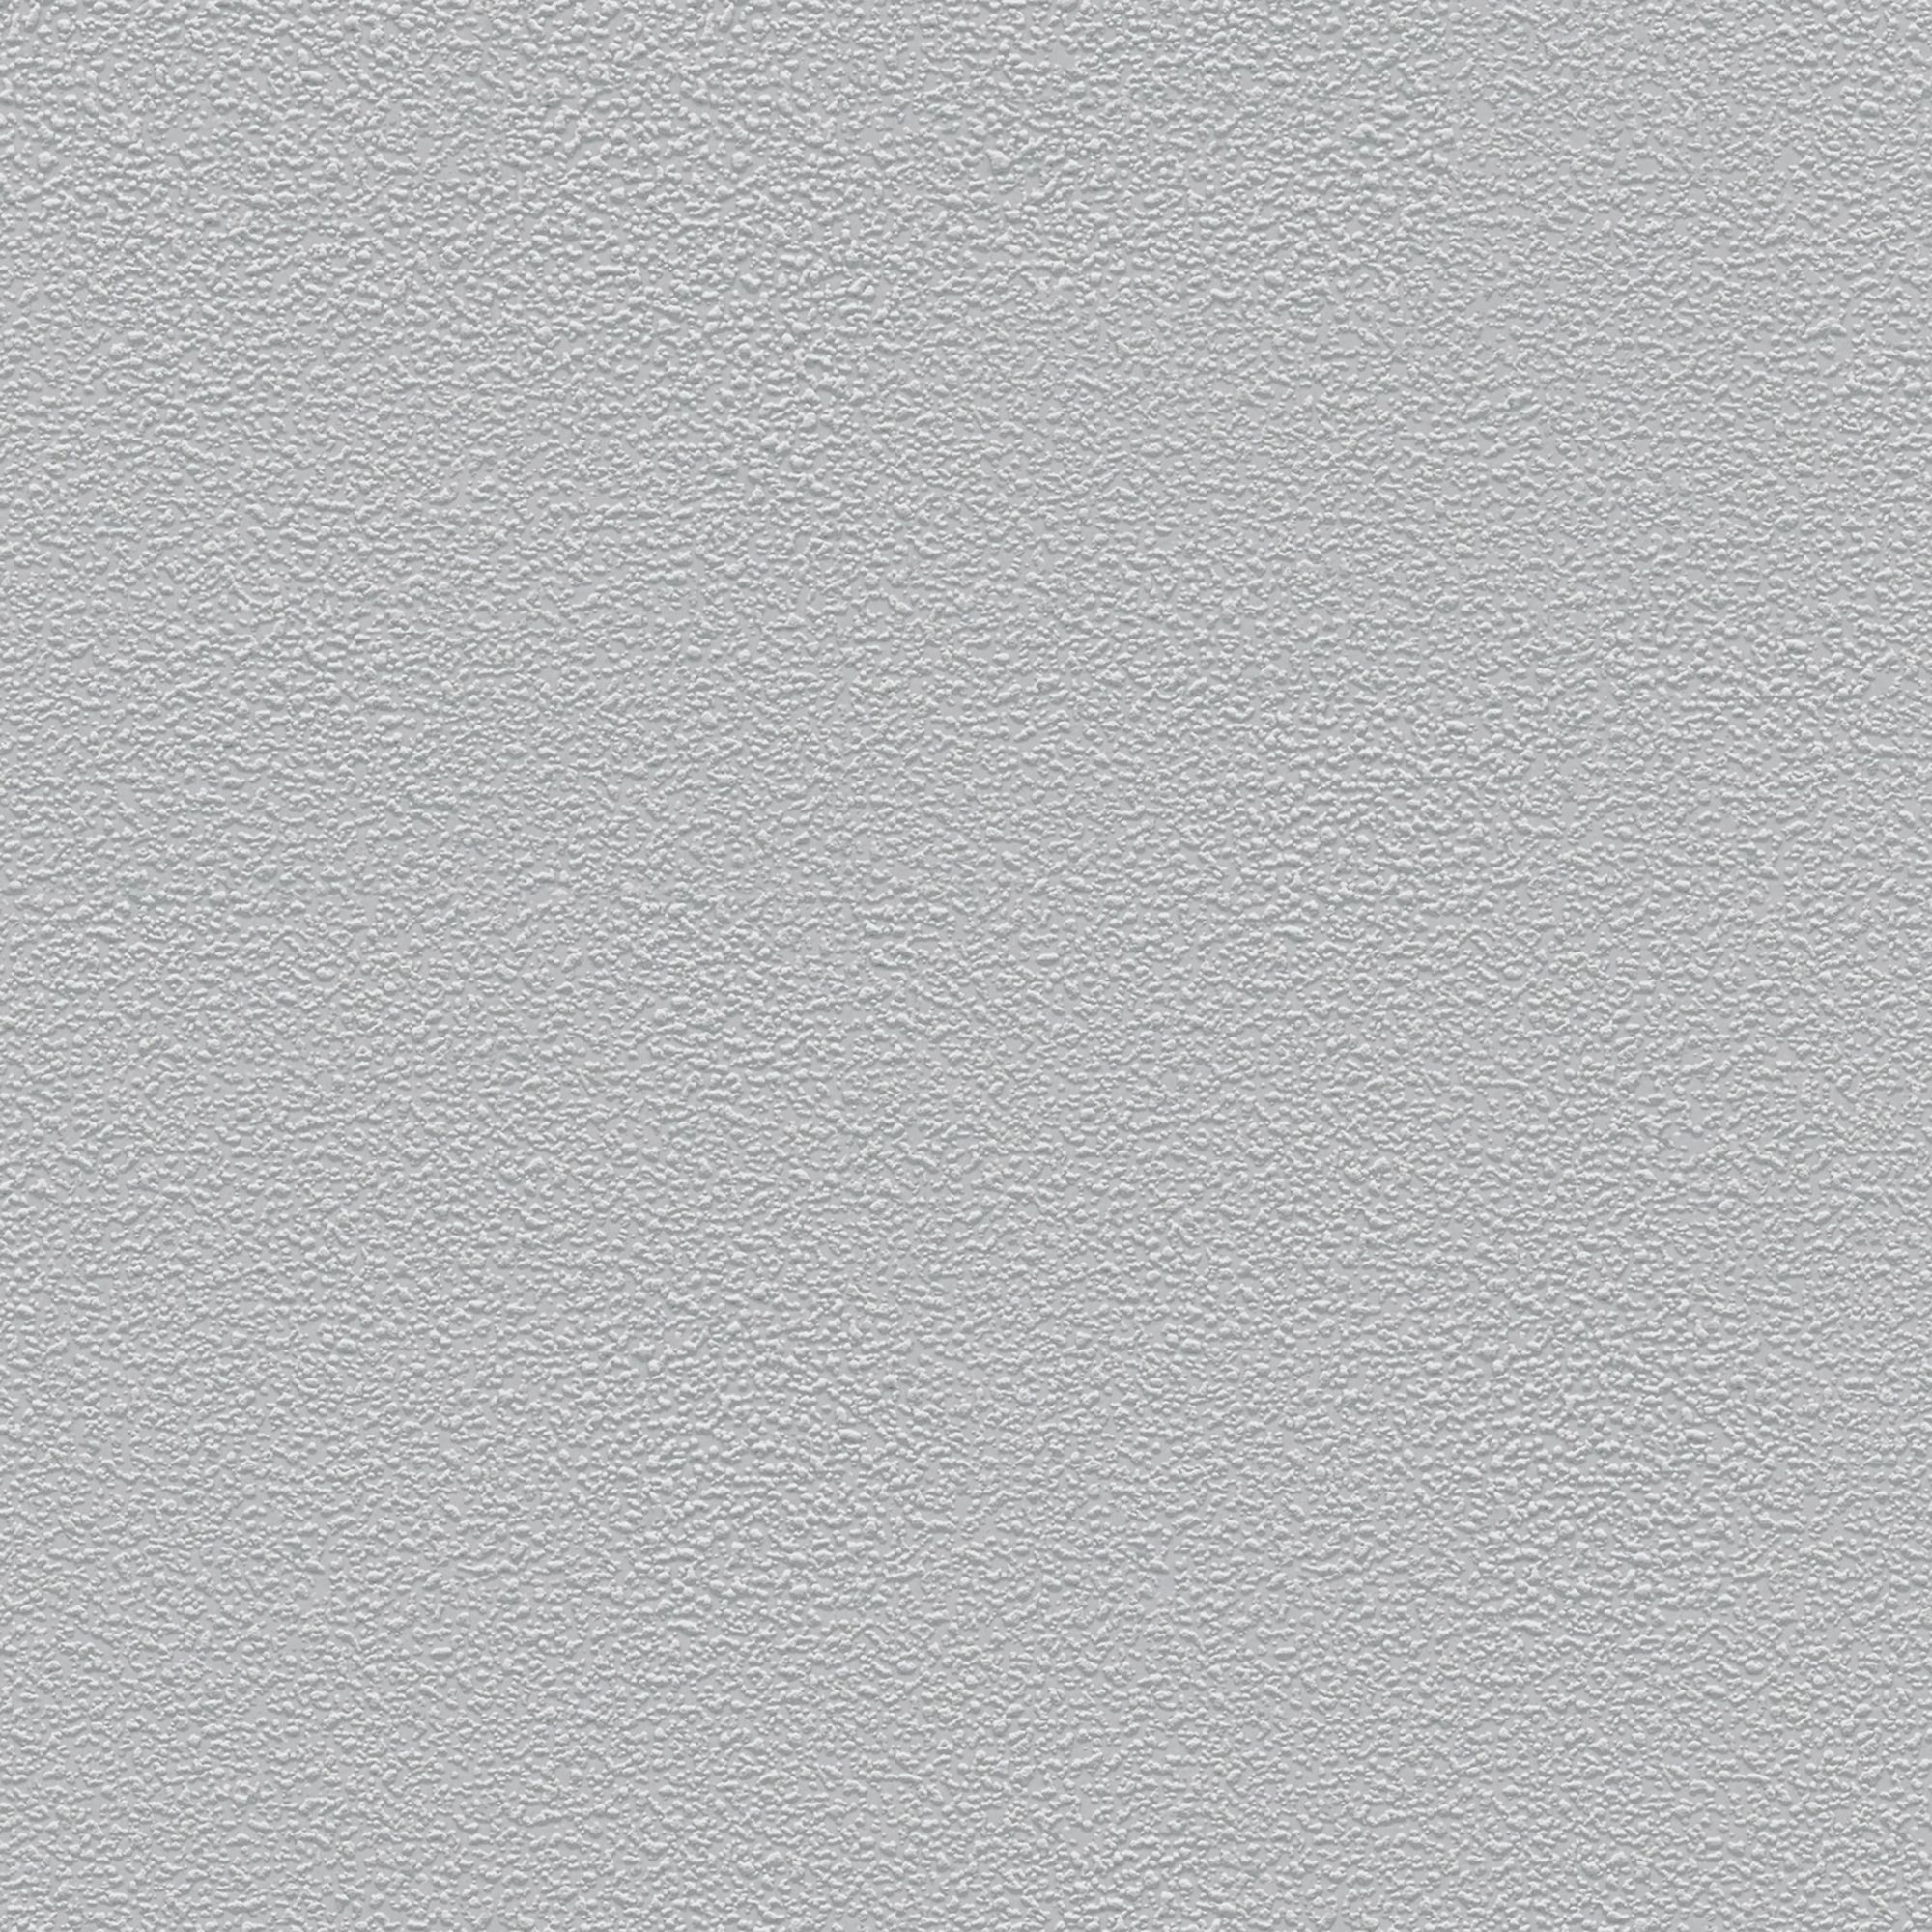 Vauquois Grey Plaster effect Textured Wallpaper Sample